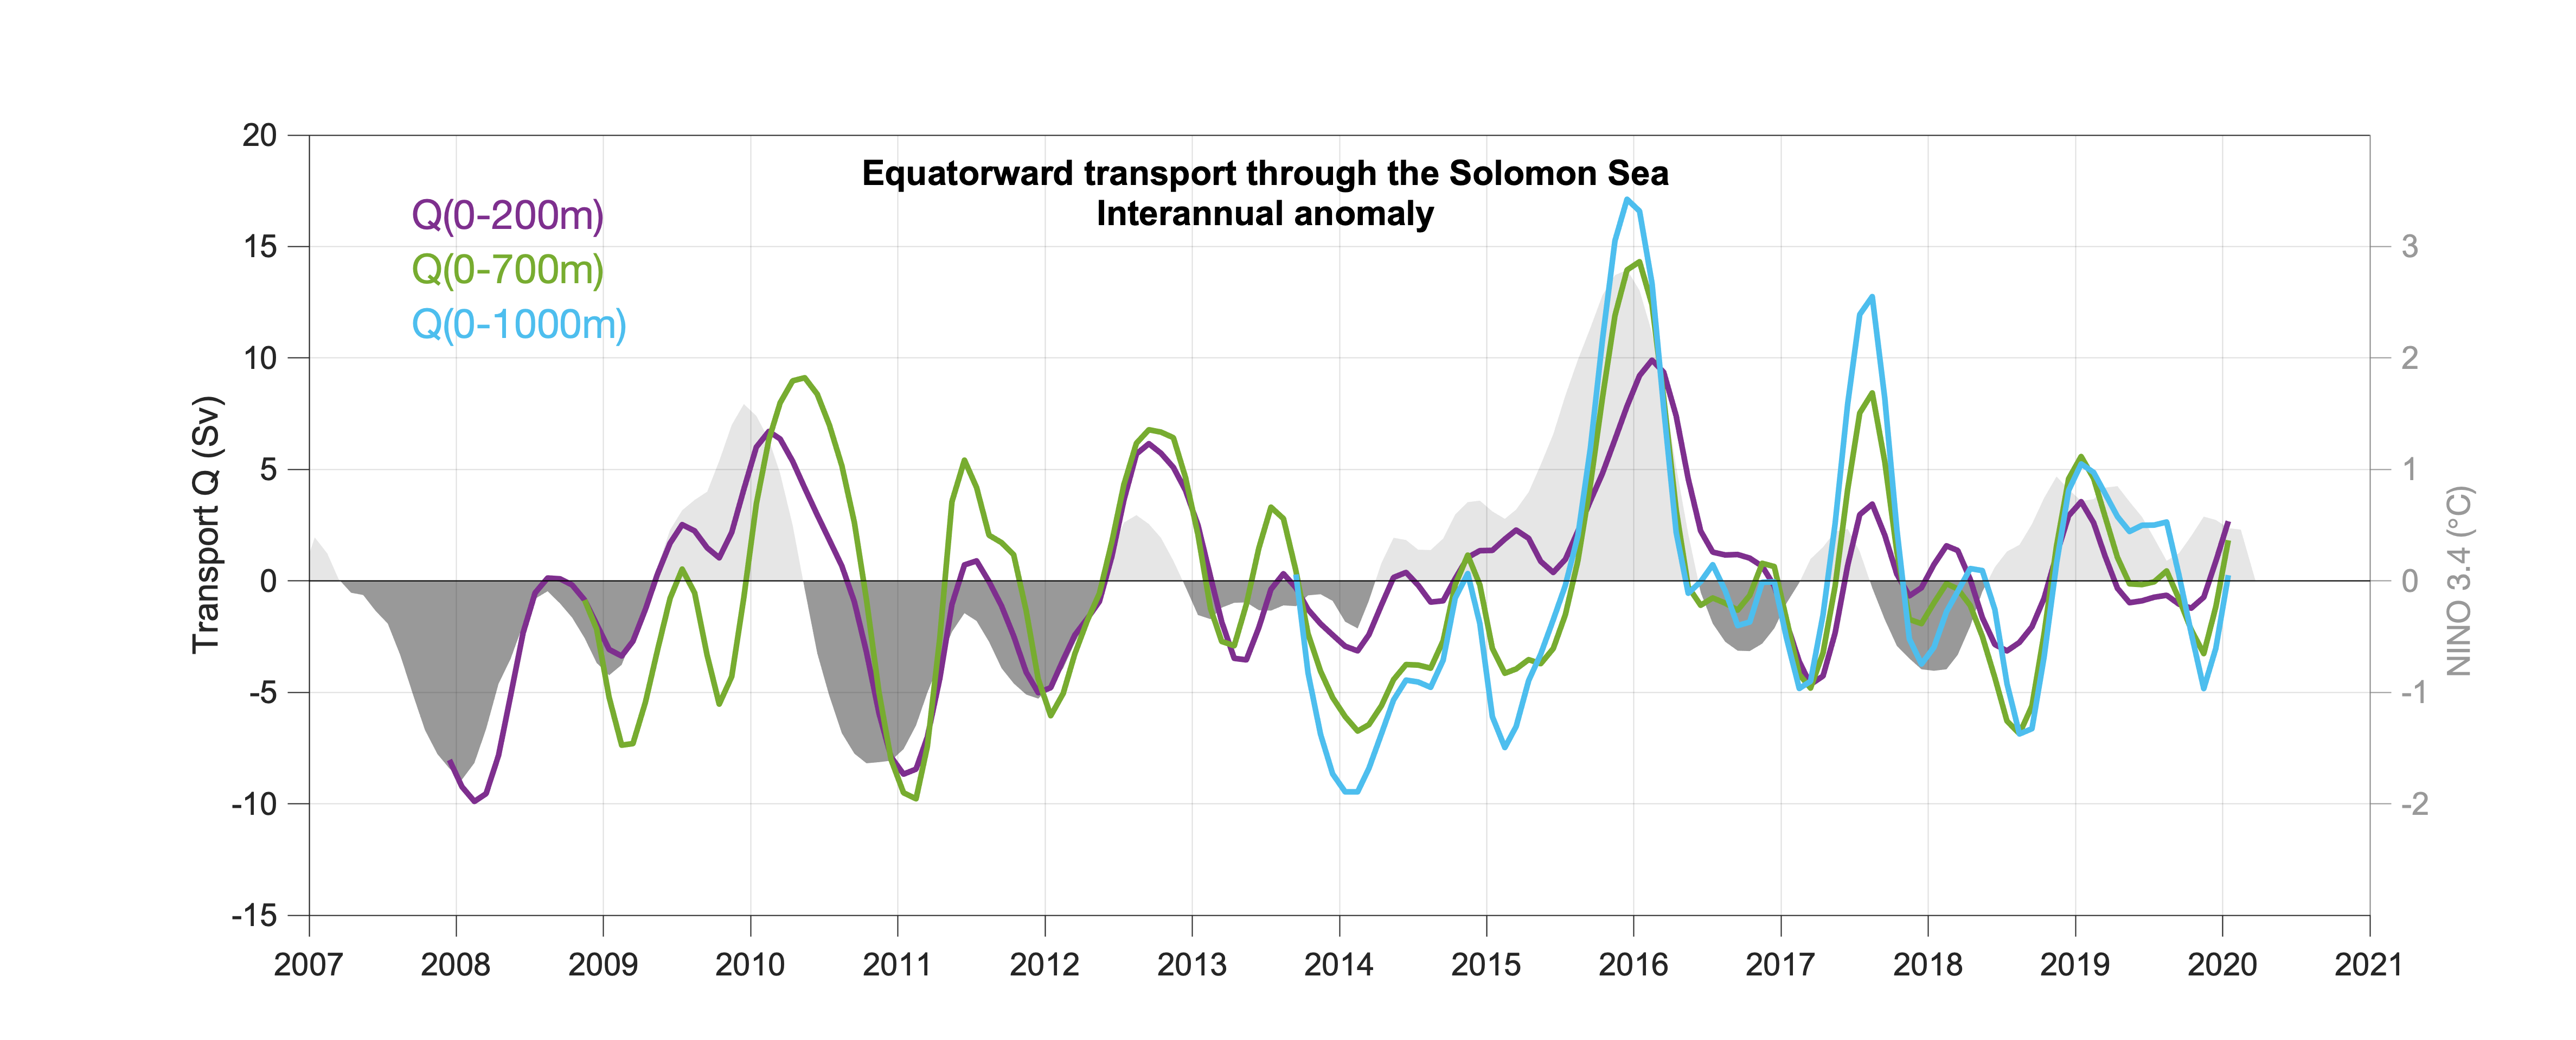 Graph of interannual anomalies of coast-to-coast volume transport Q through the Solomon Sea